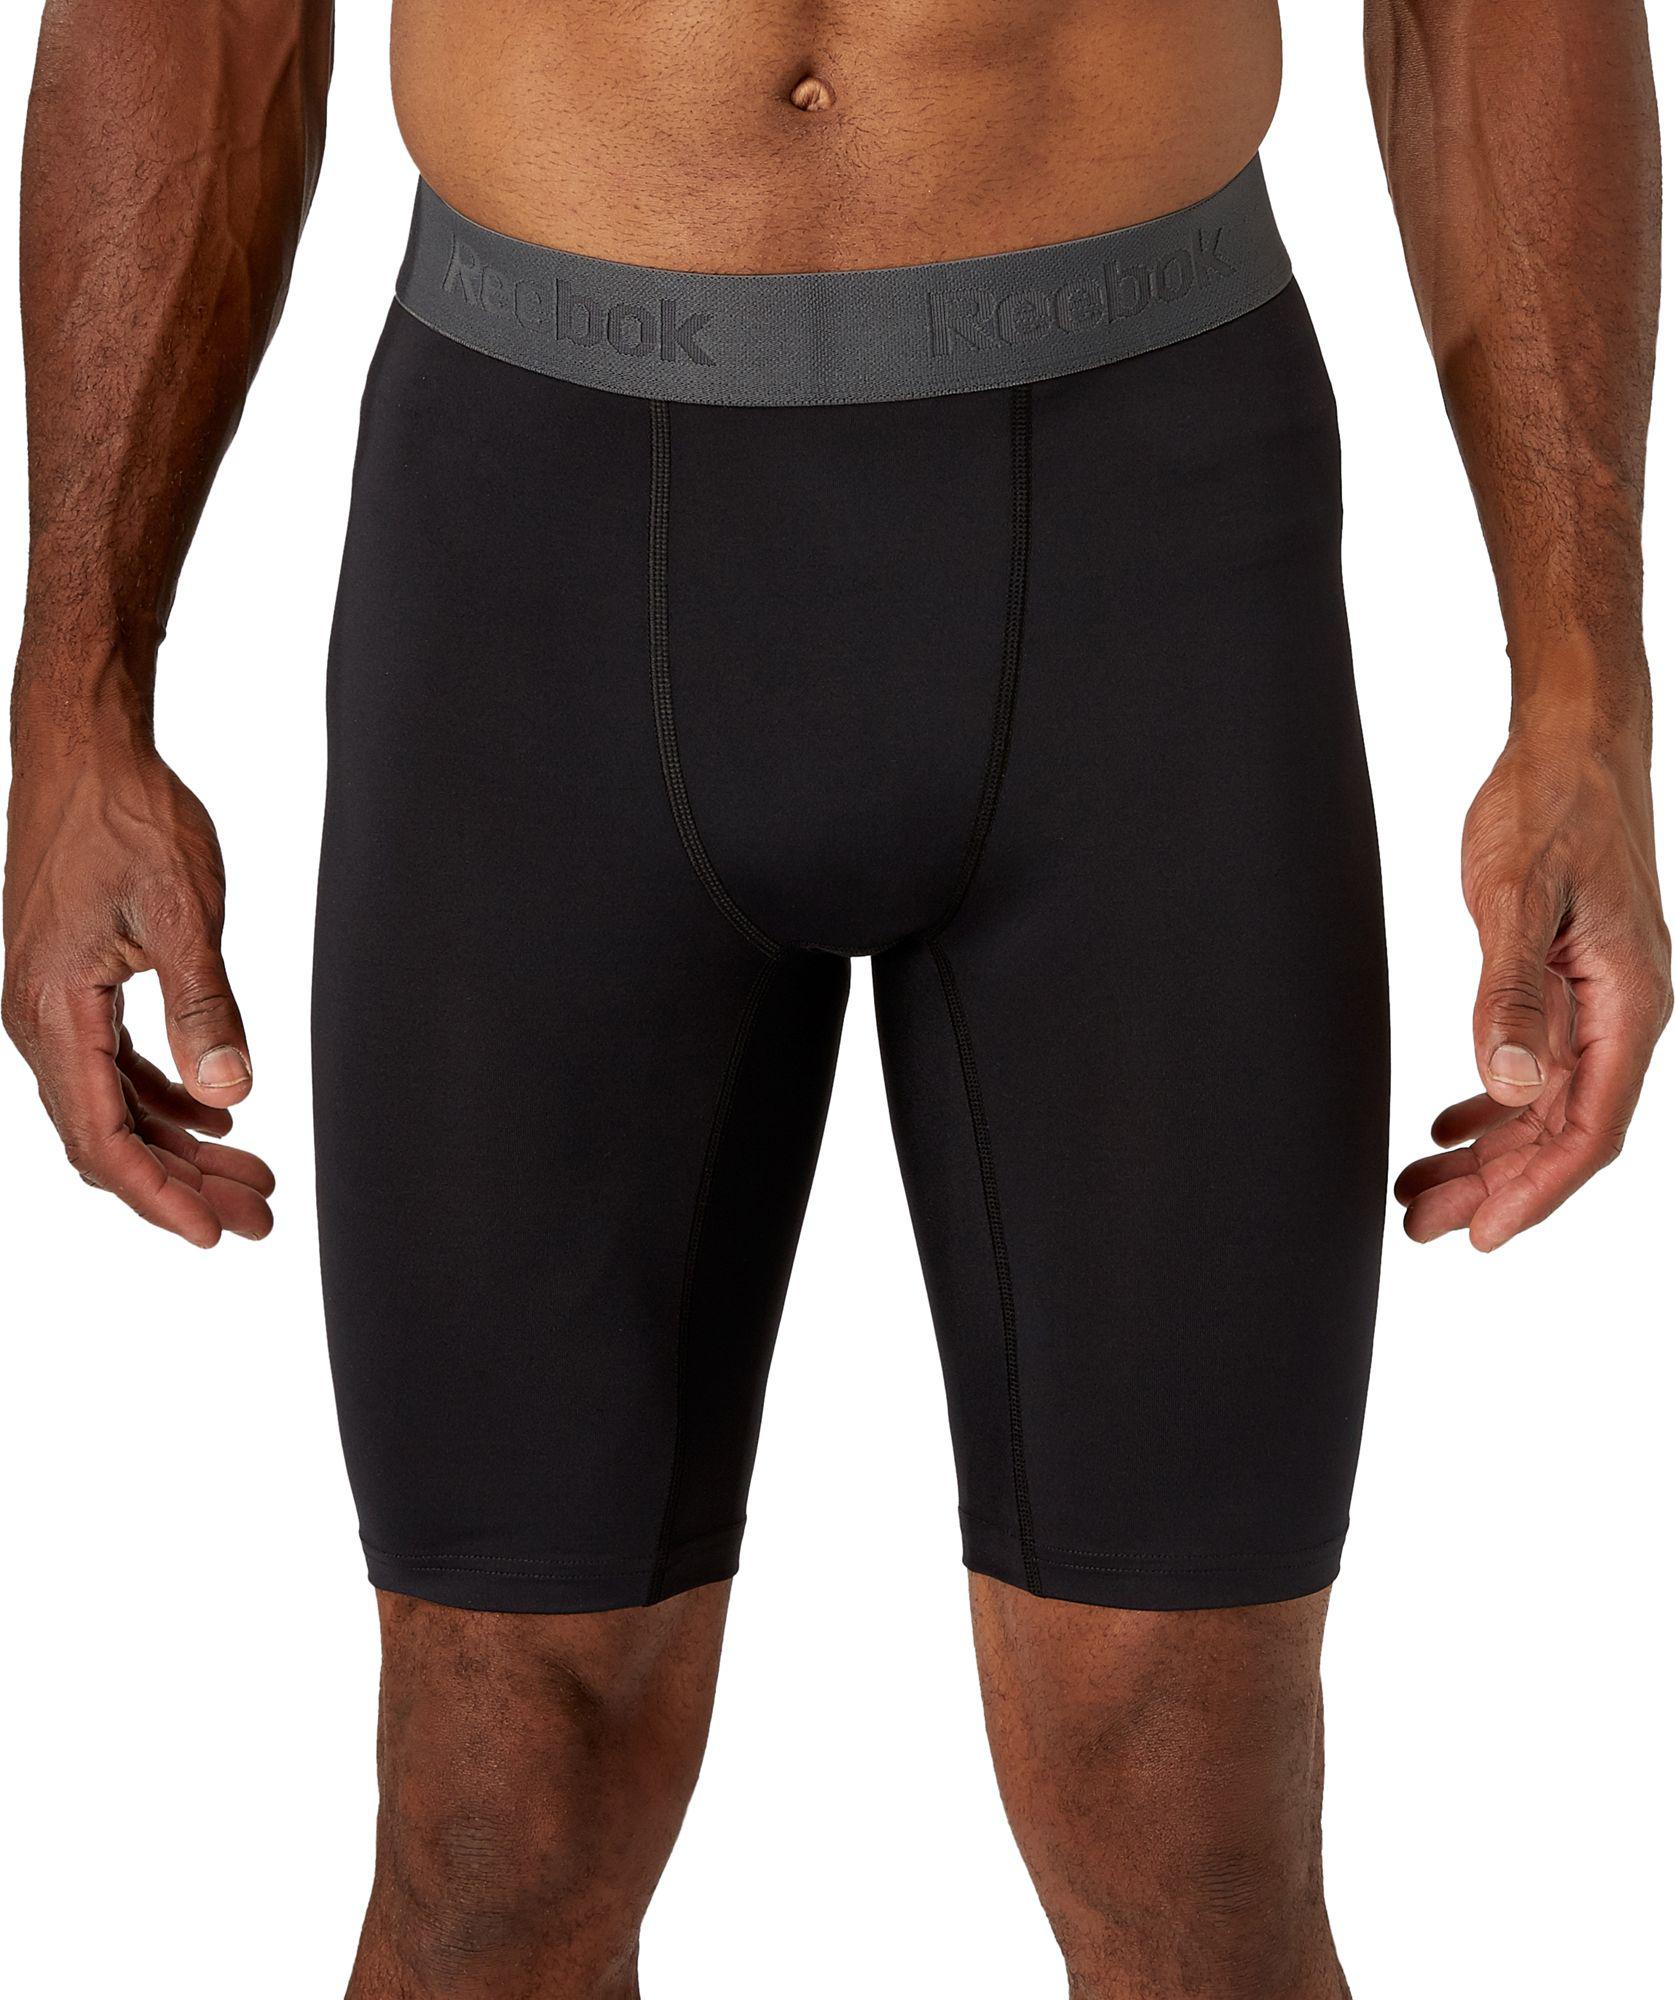 Download Lyst - Reebok 10'' Compression Shorts in Black for Men